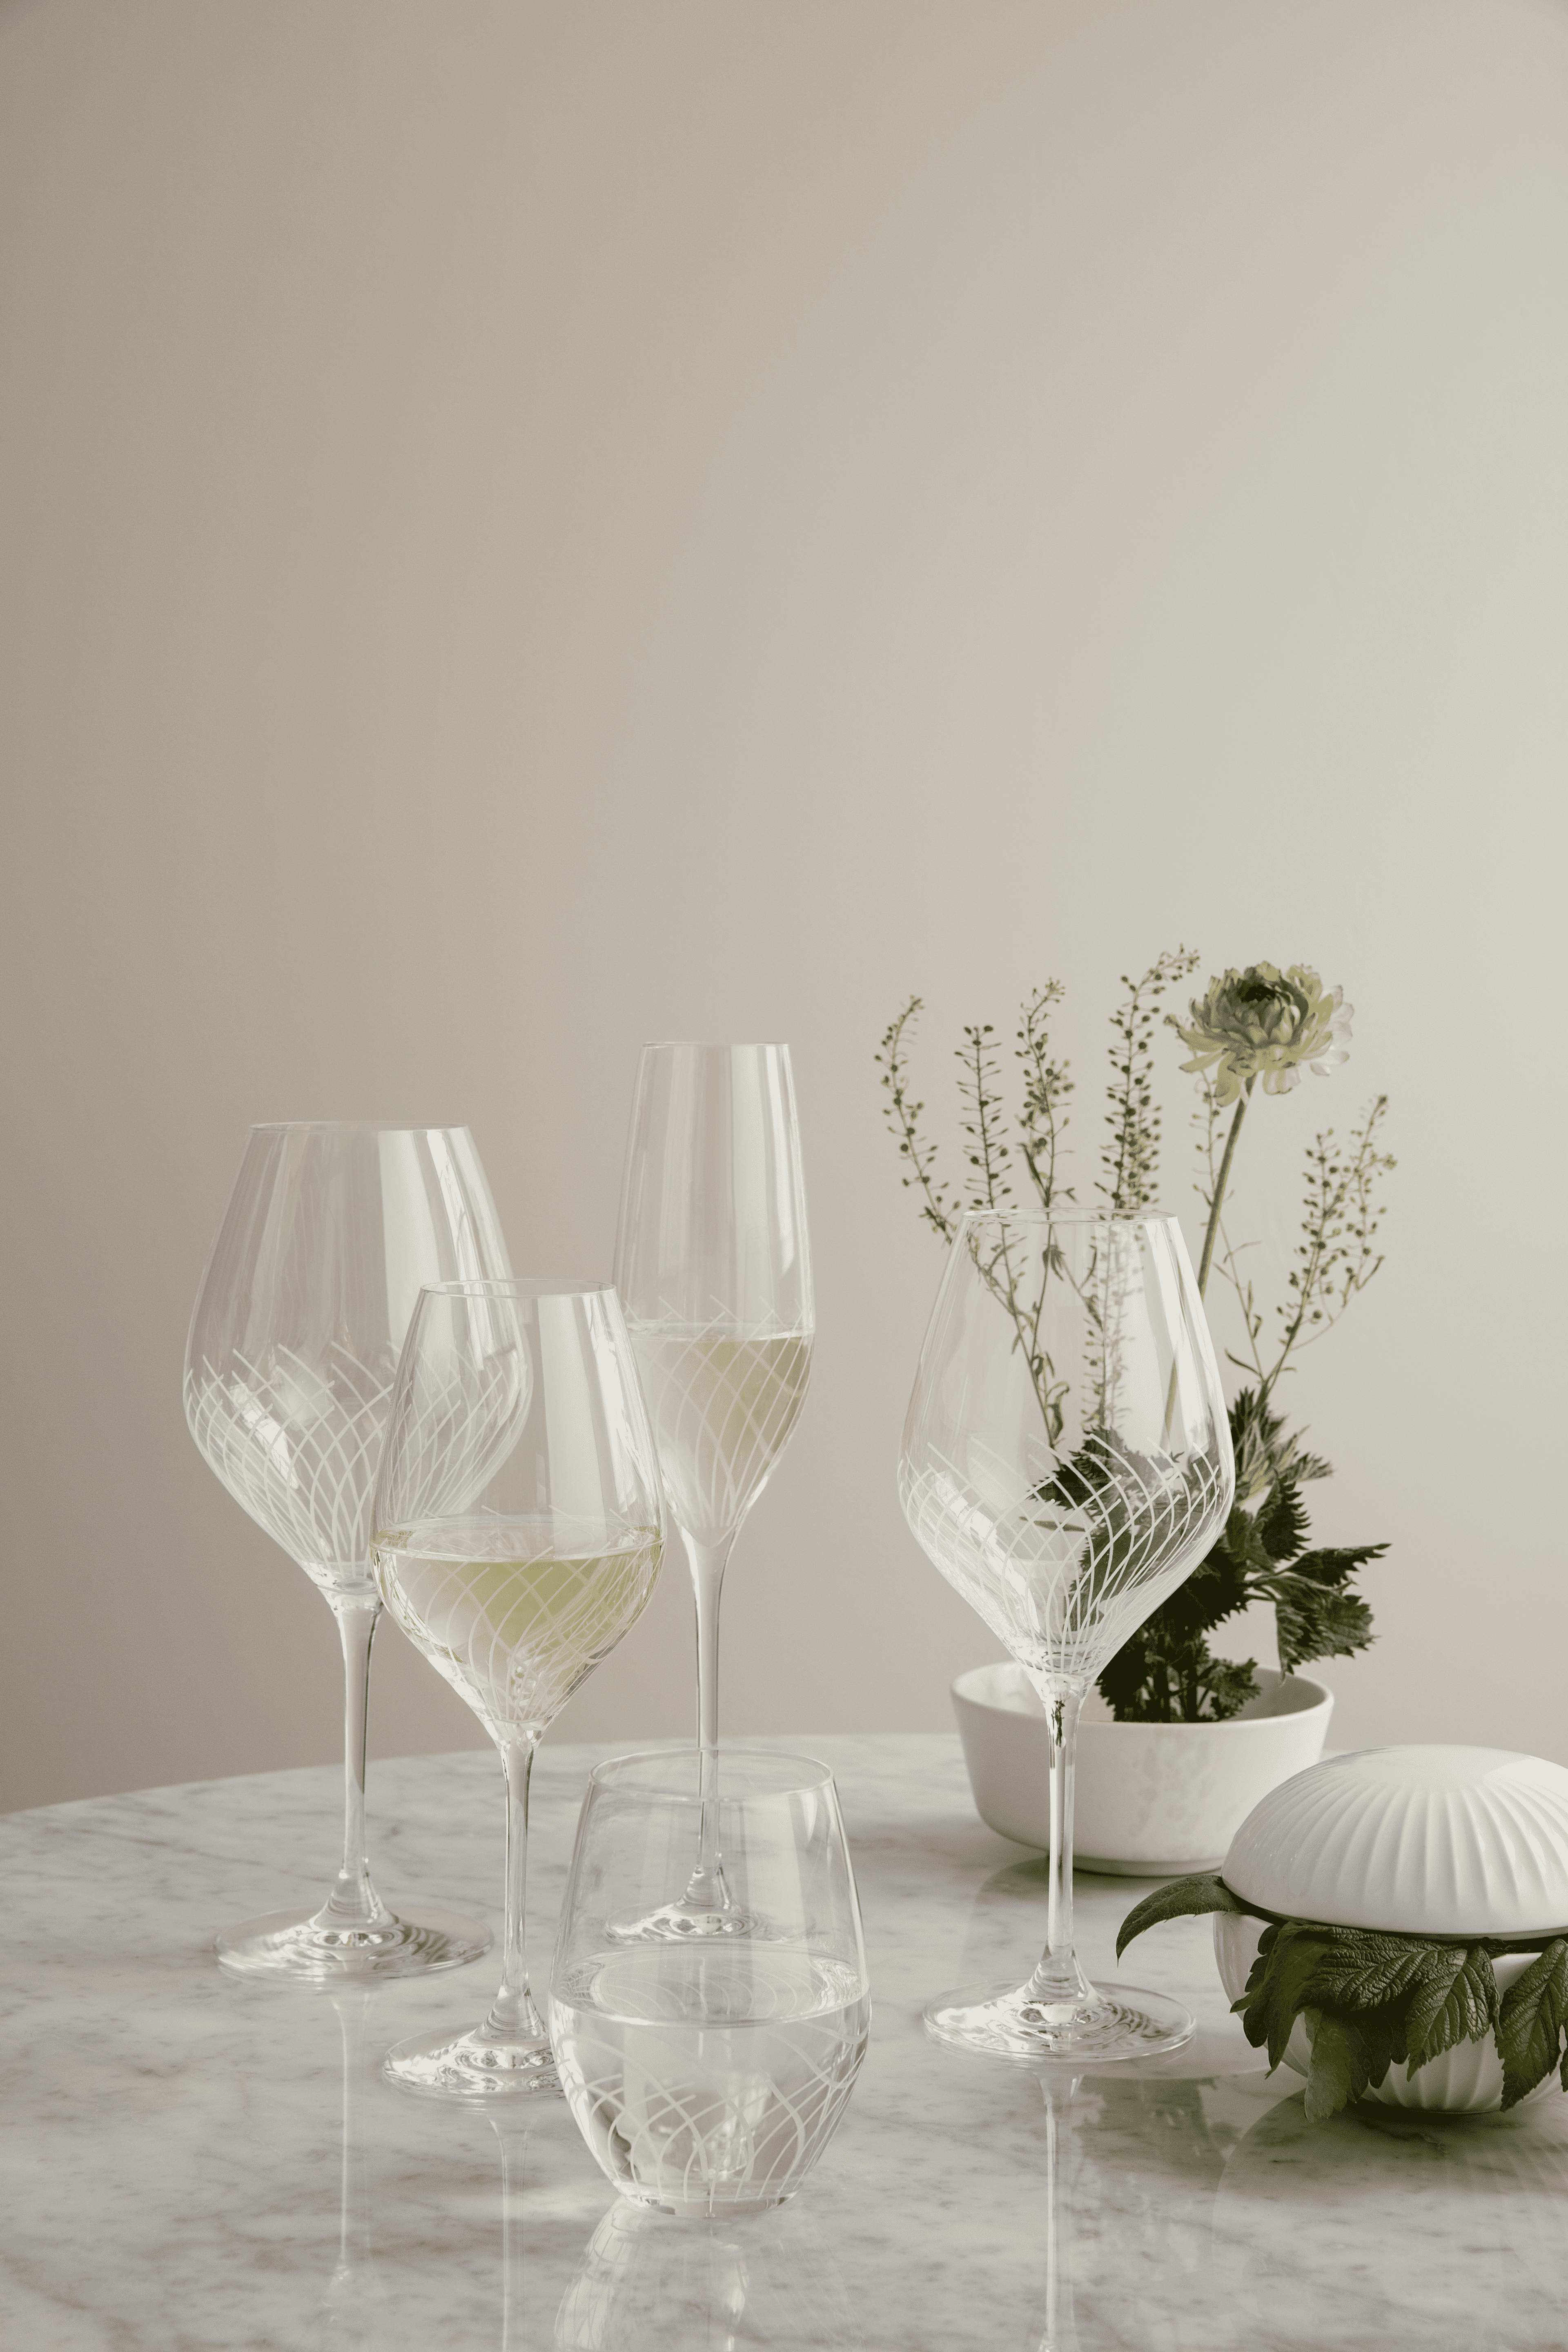 White Wine Glass 36 cl 2 pcs.